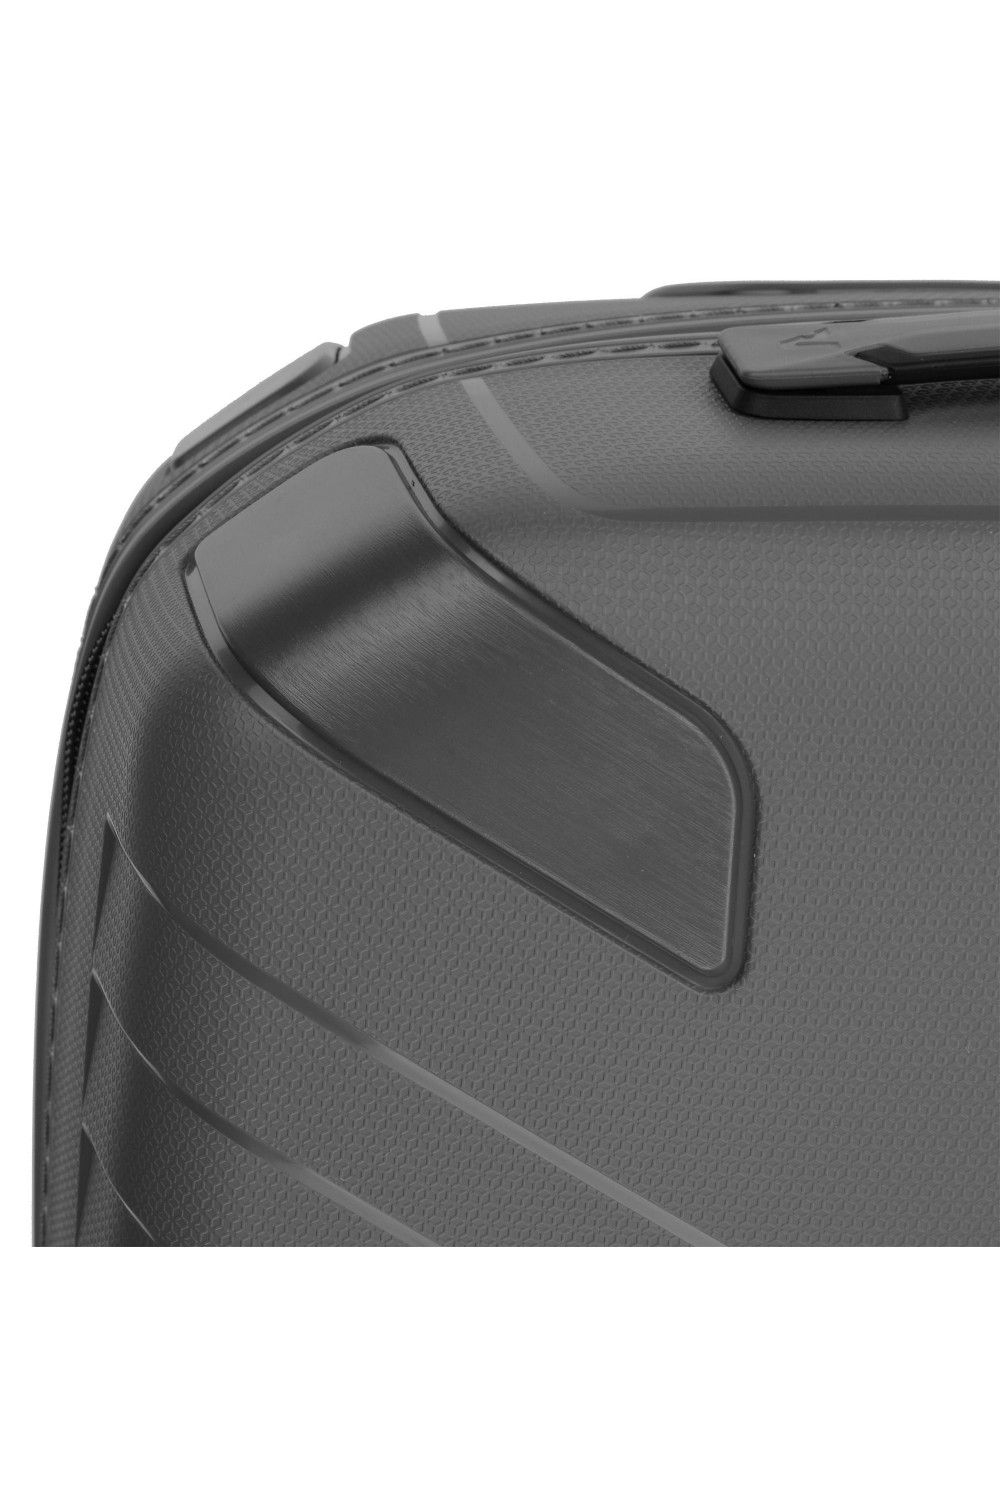 Hand luggage Roncato Ypsilon 4 55x40x20cm 4 wheels USB